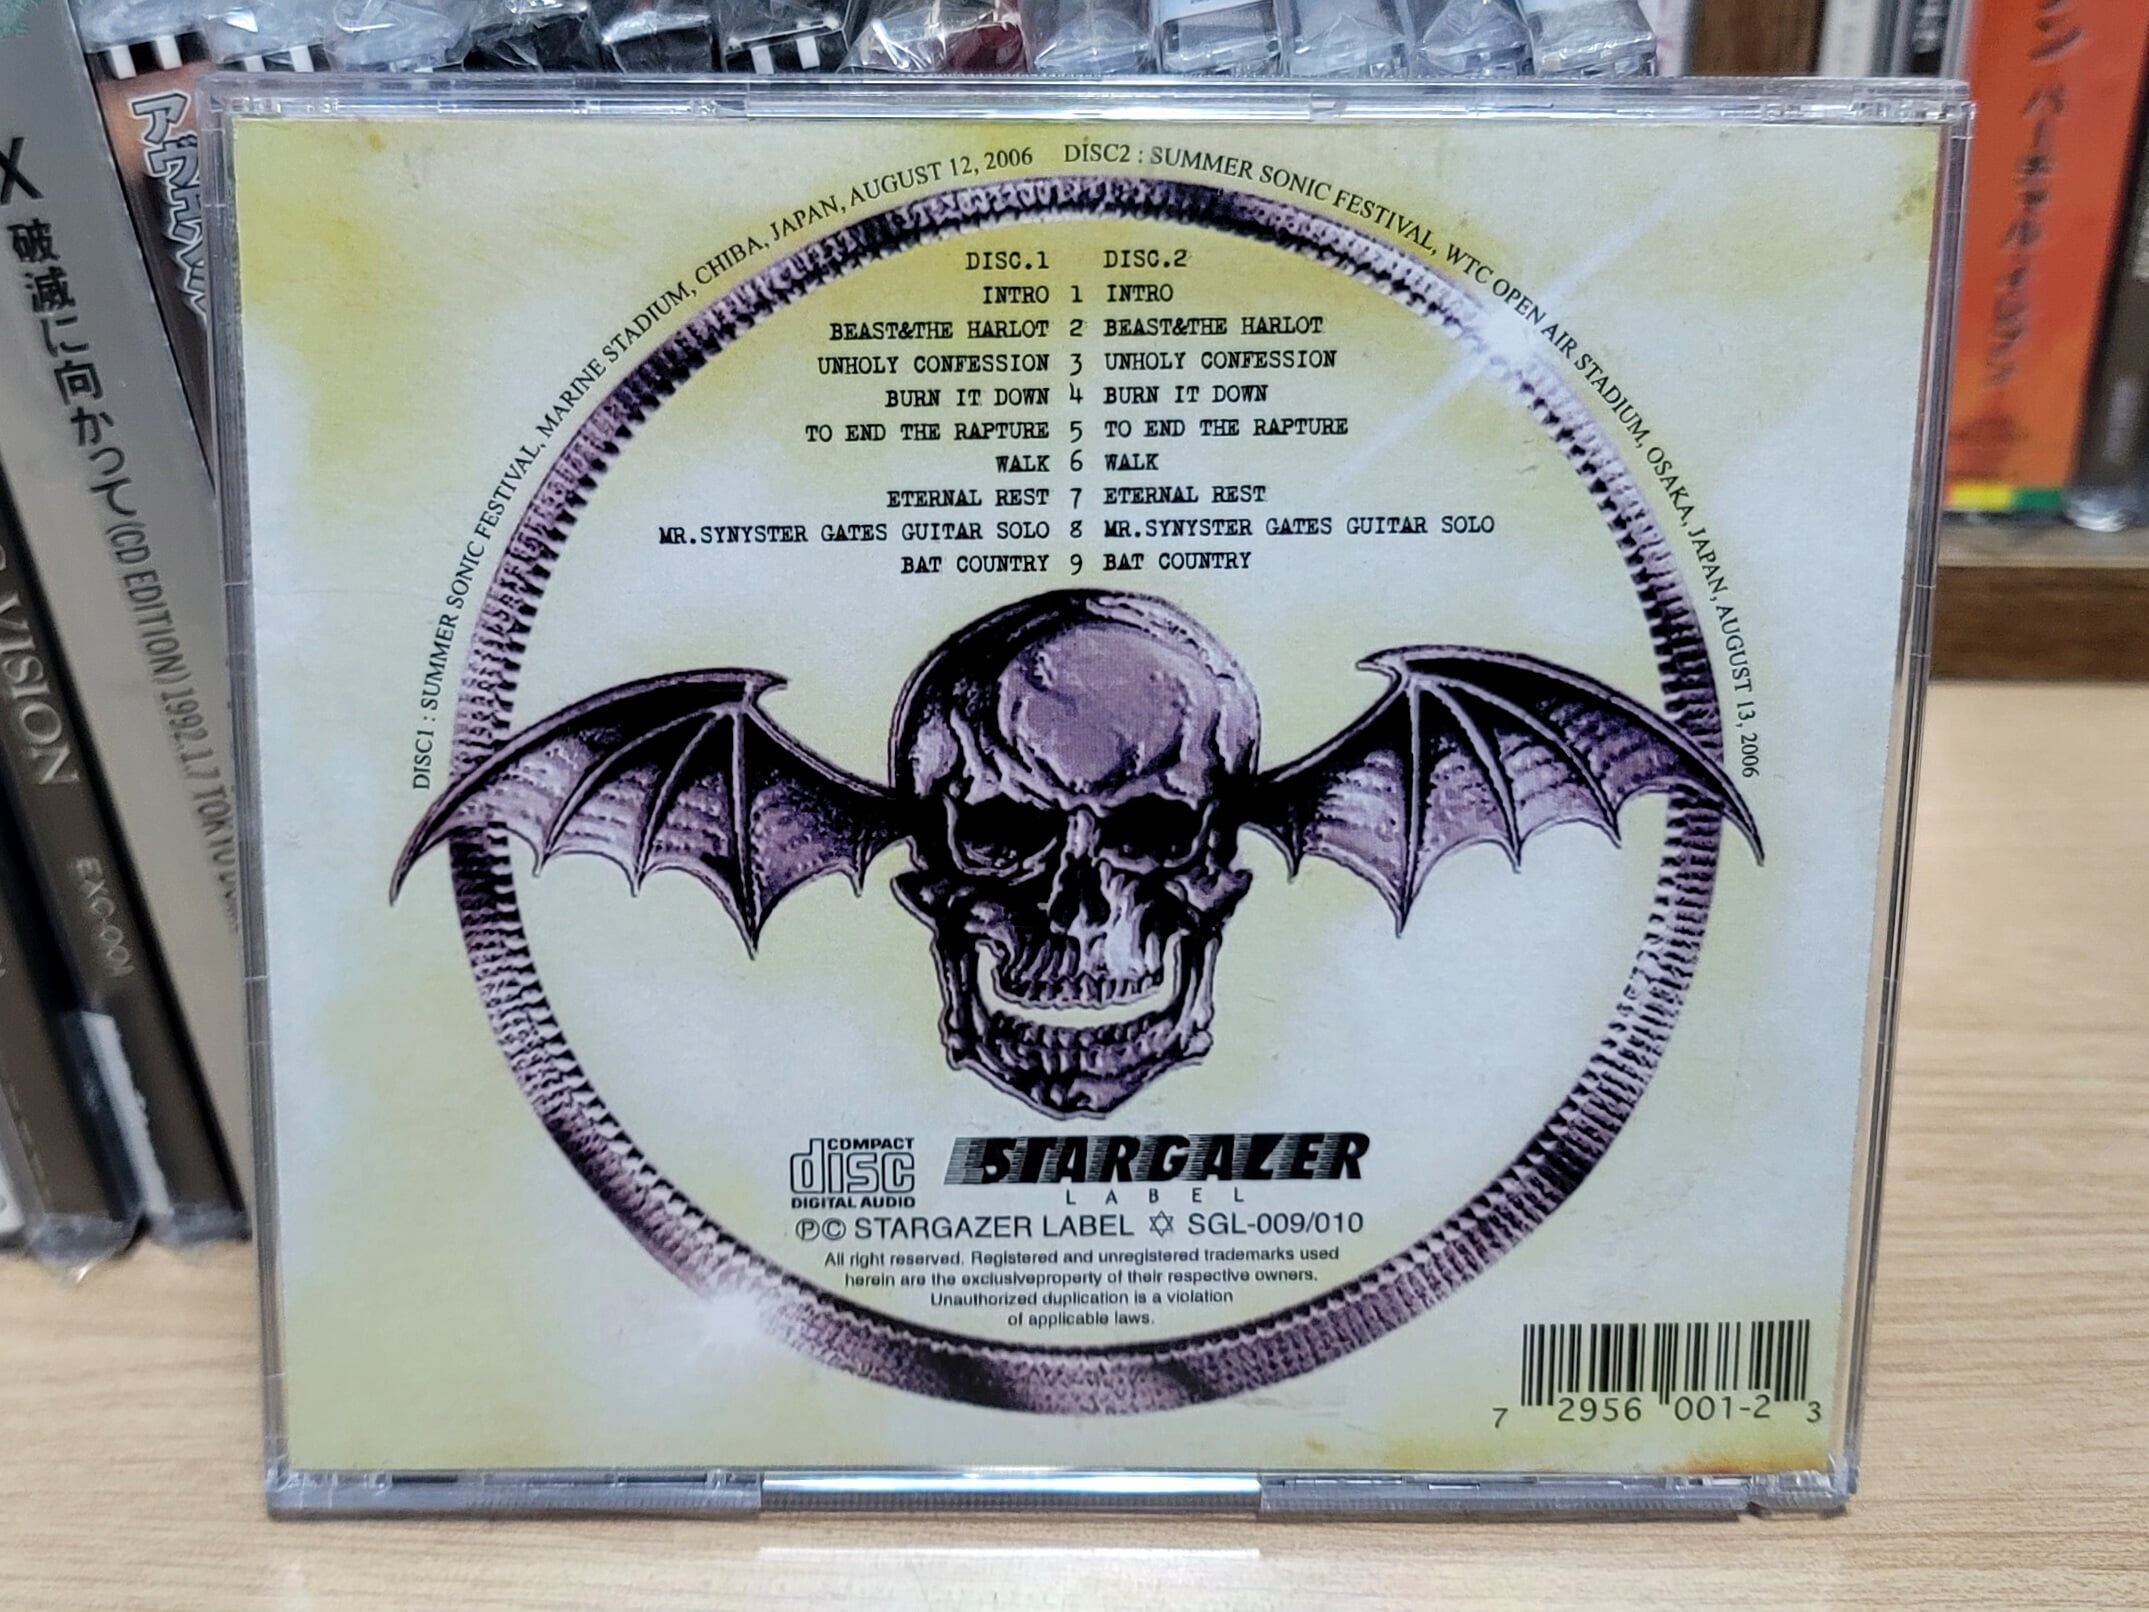 (2CD 희귀 수입반 부틀렉) Avenged Sevenfold - Black Reign (2006.8.12~13)